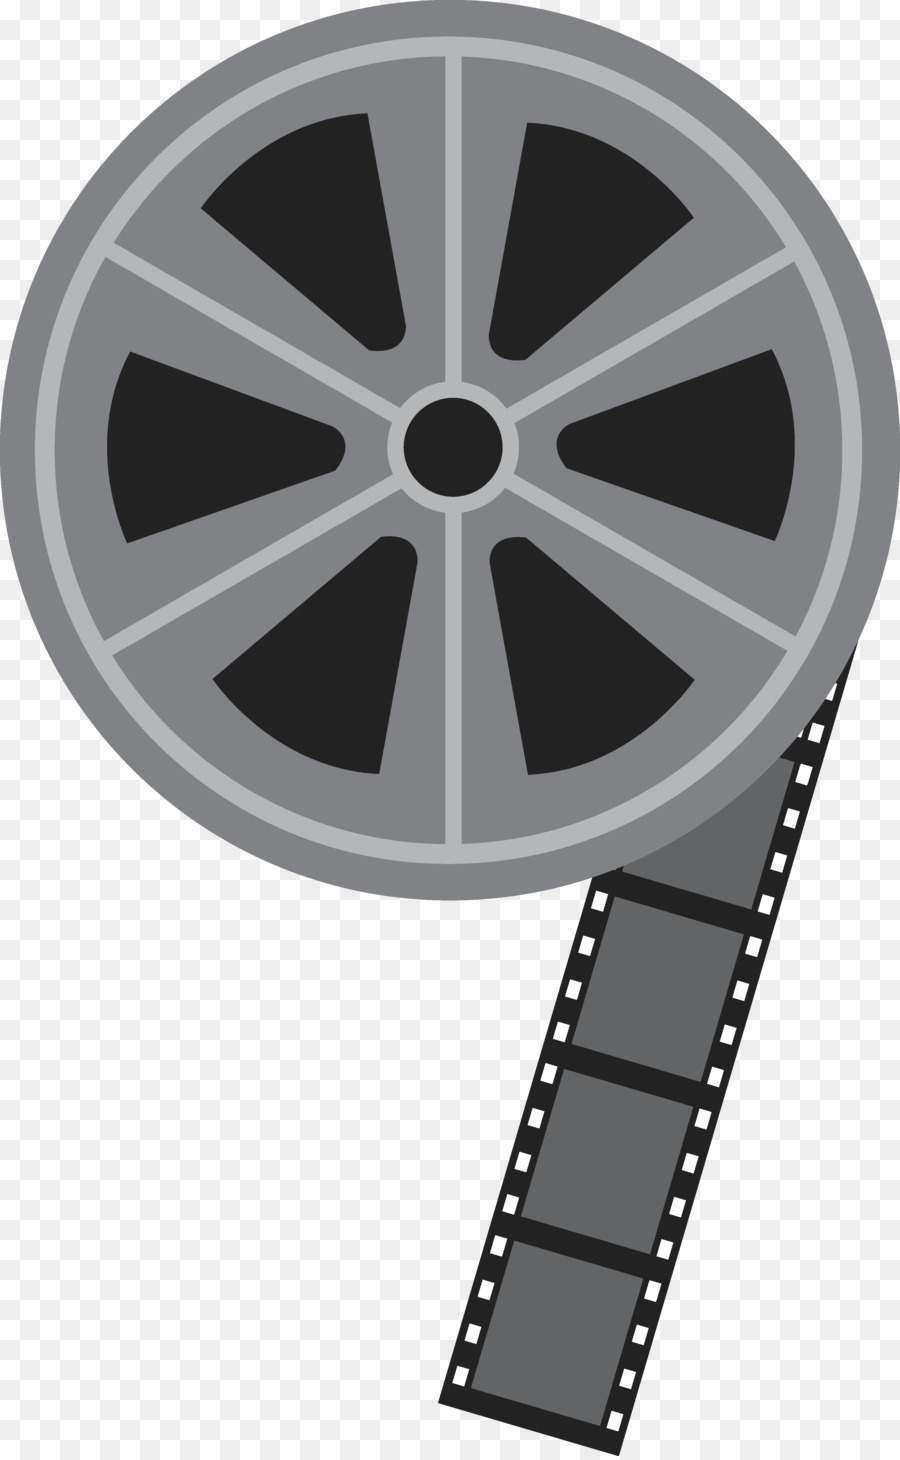 Film Cinema Free content Clip art - Film Reel Cliparts png download - 3410*5515 - Free Transparent Film png Download.